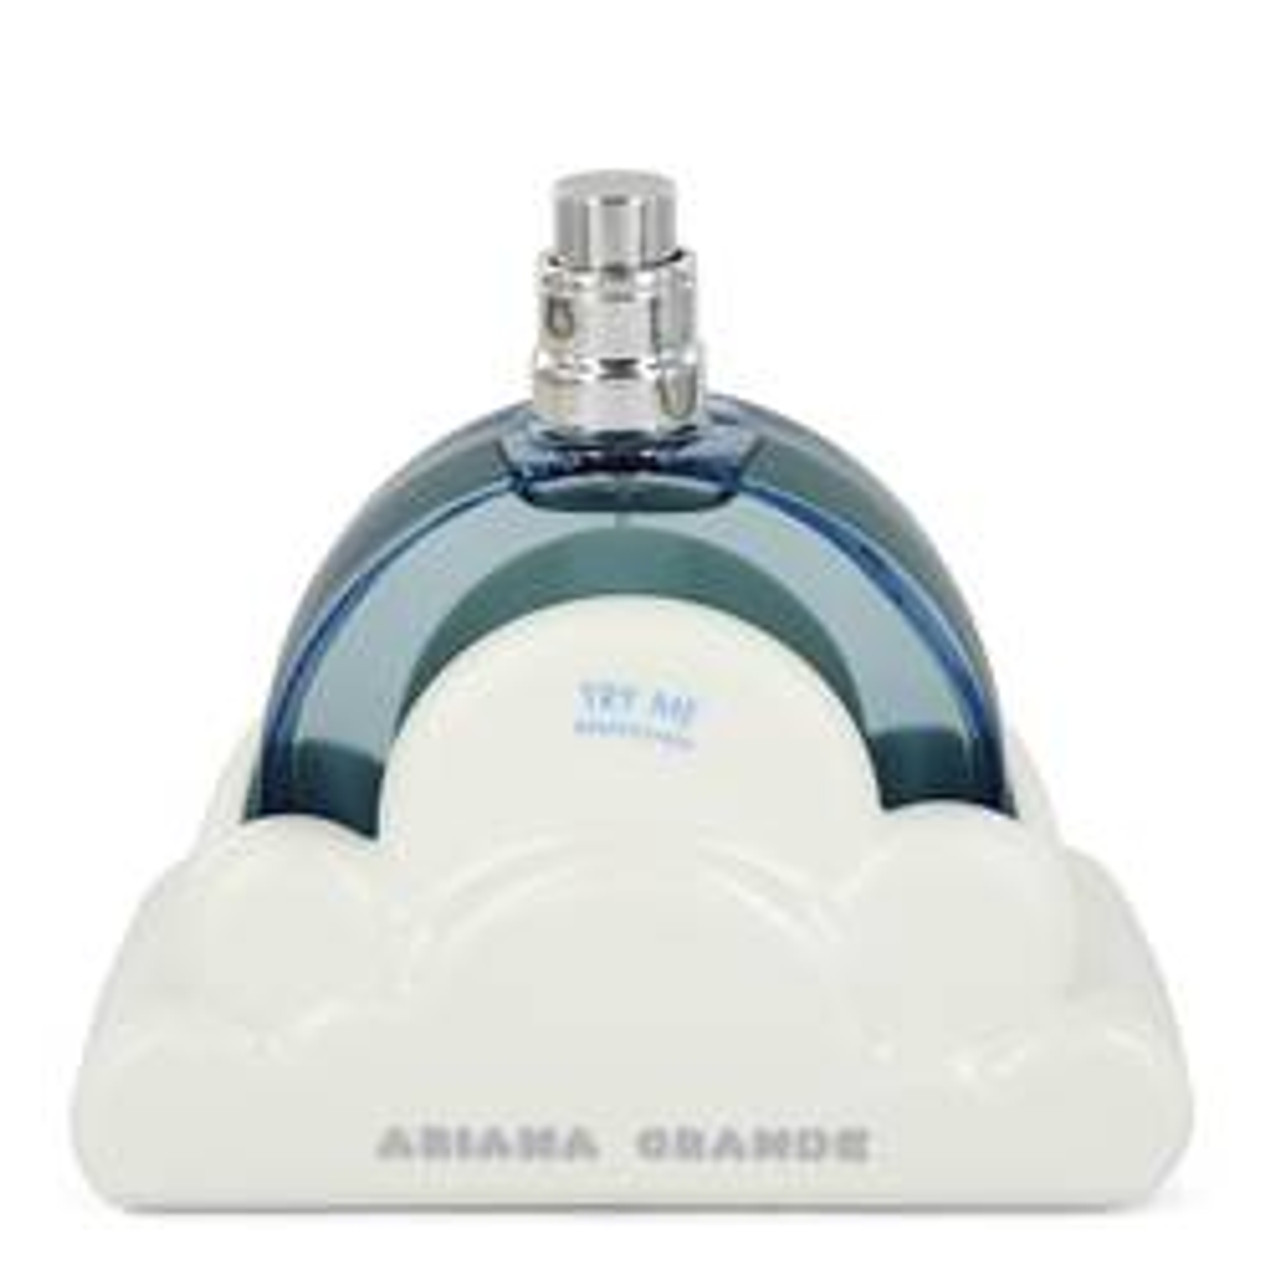 Ariana Grande Cloud Perfume By Ariana Grande Eau De Parfum Spray (Tester) 3.4 oz for Women - *Pre-Order